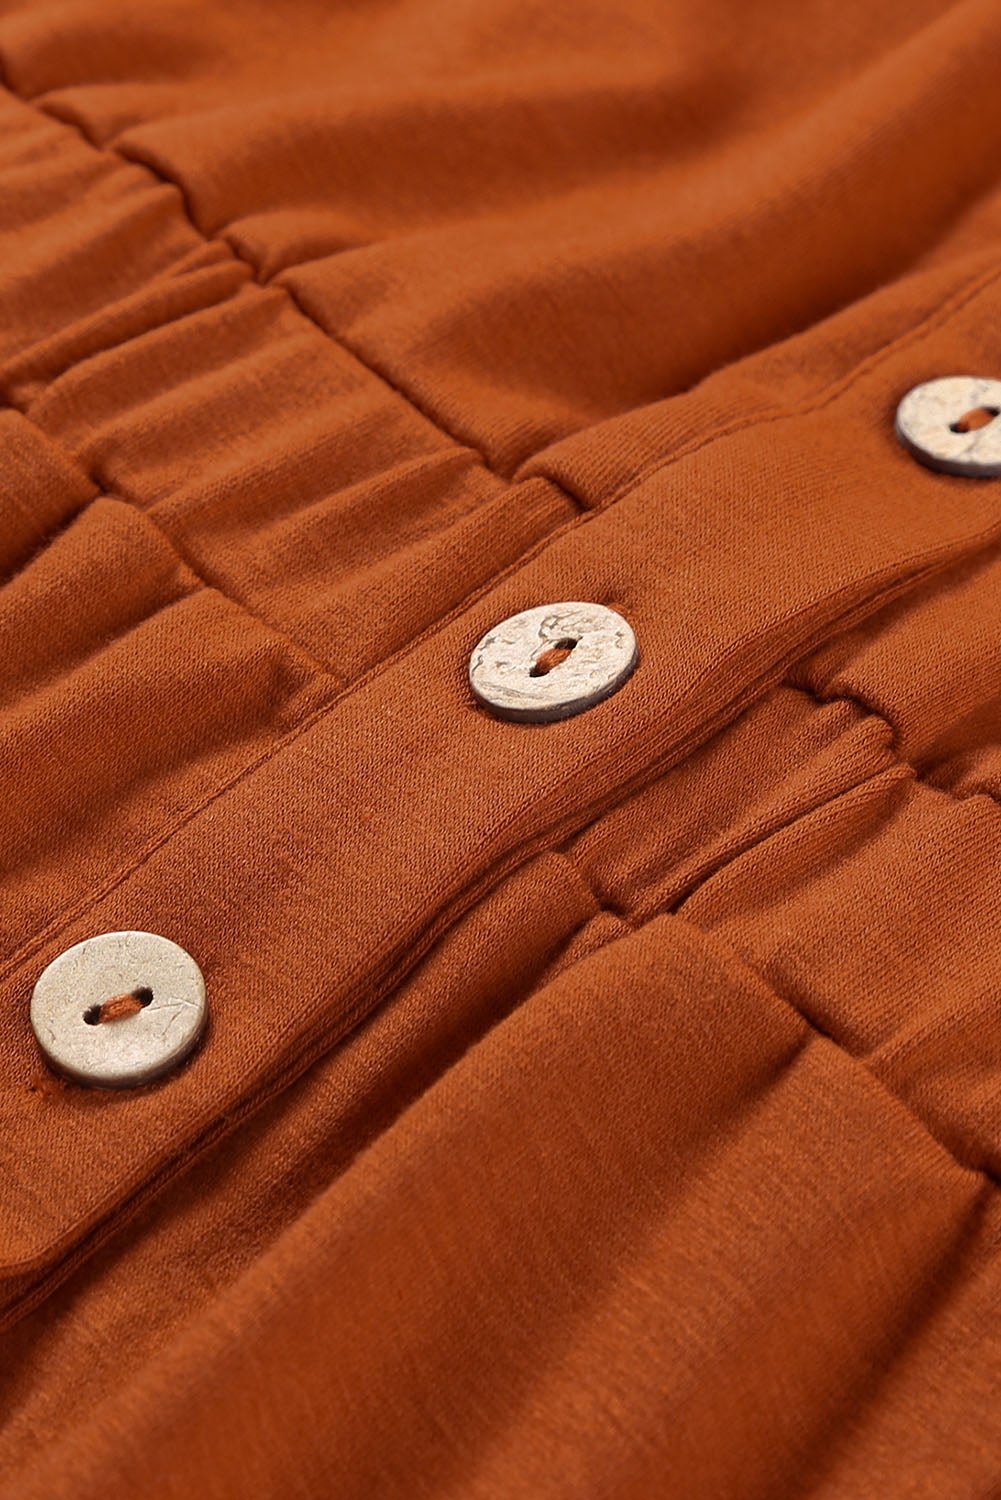 Brown Button Up High Waist Long Sleeve Dress Midi Dresses JT's Designer Fashion